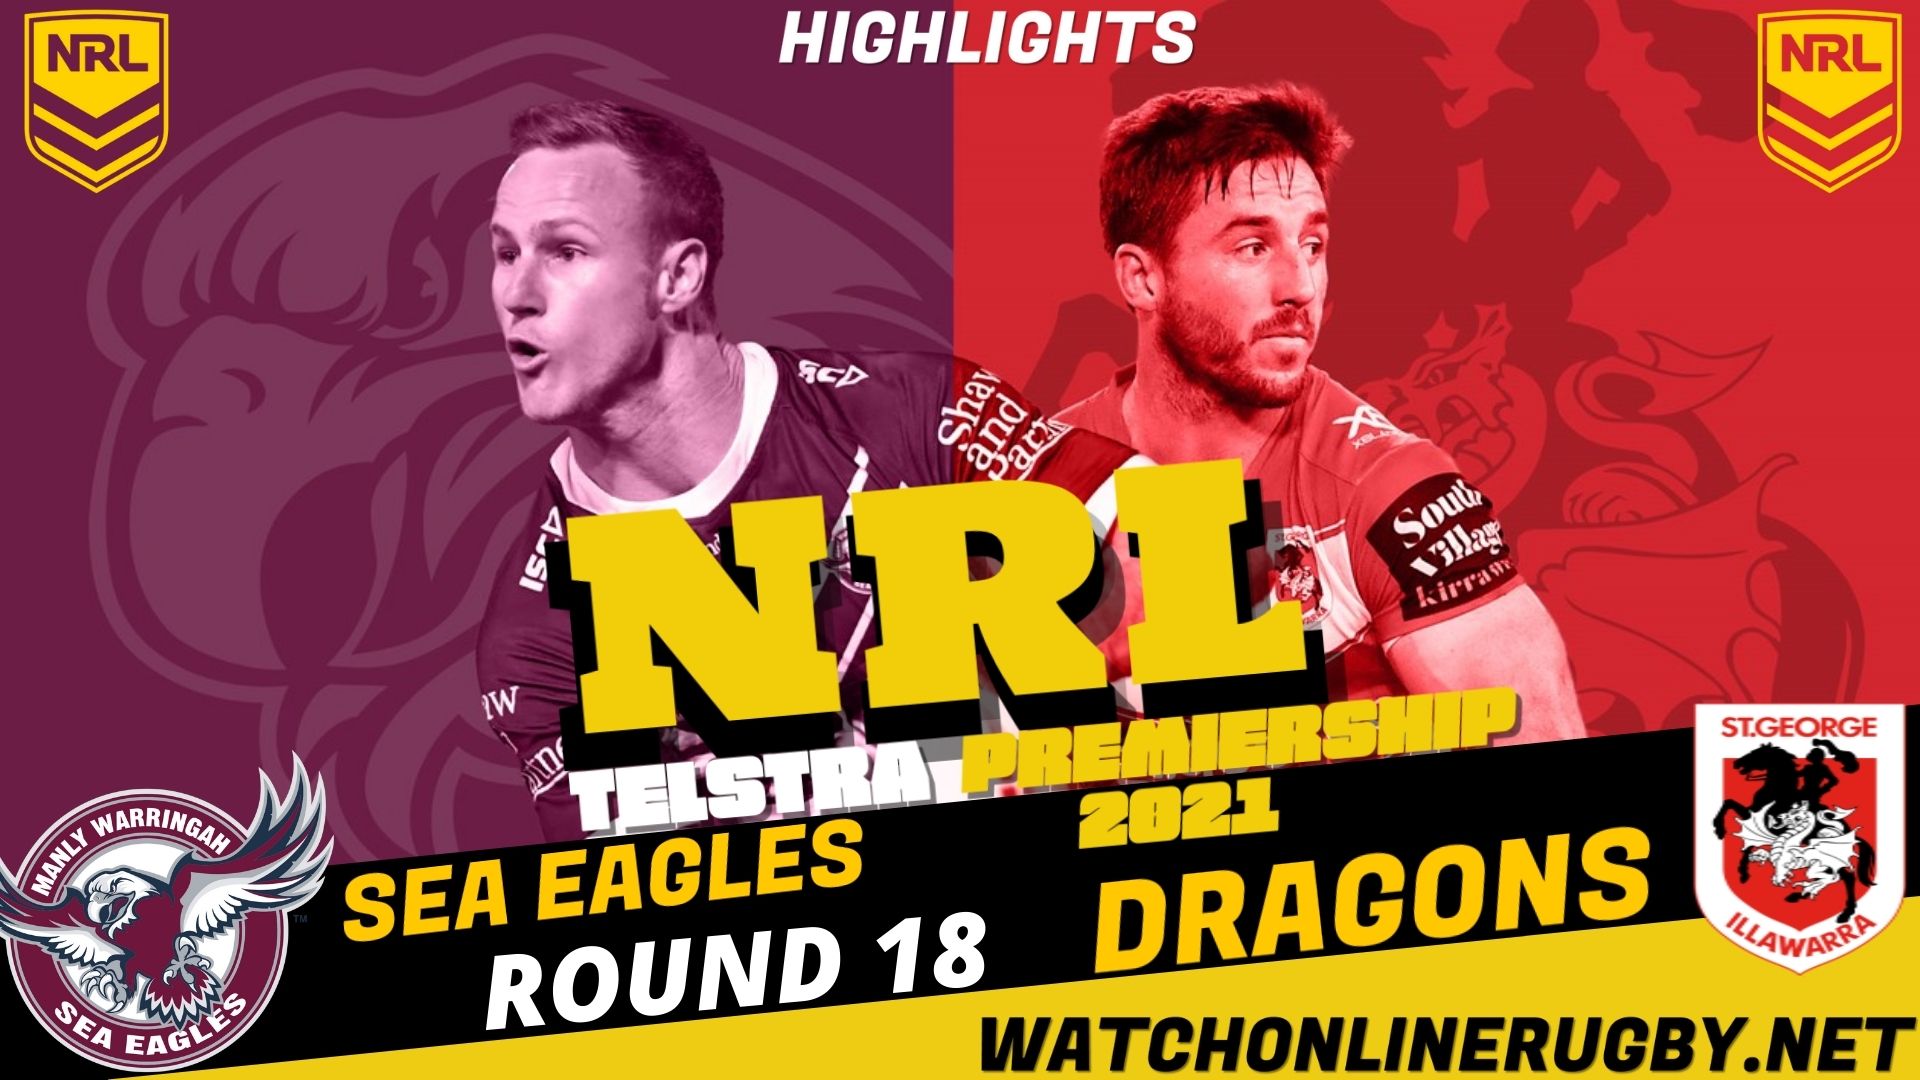 Sea Eagles Vs Dragons Highlights RD 18 NRL Rugby